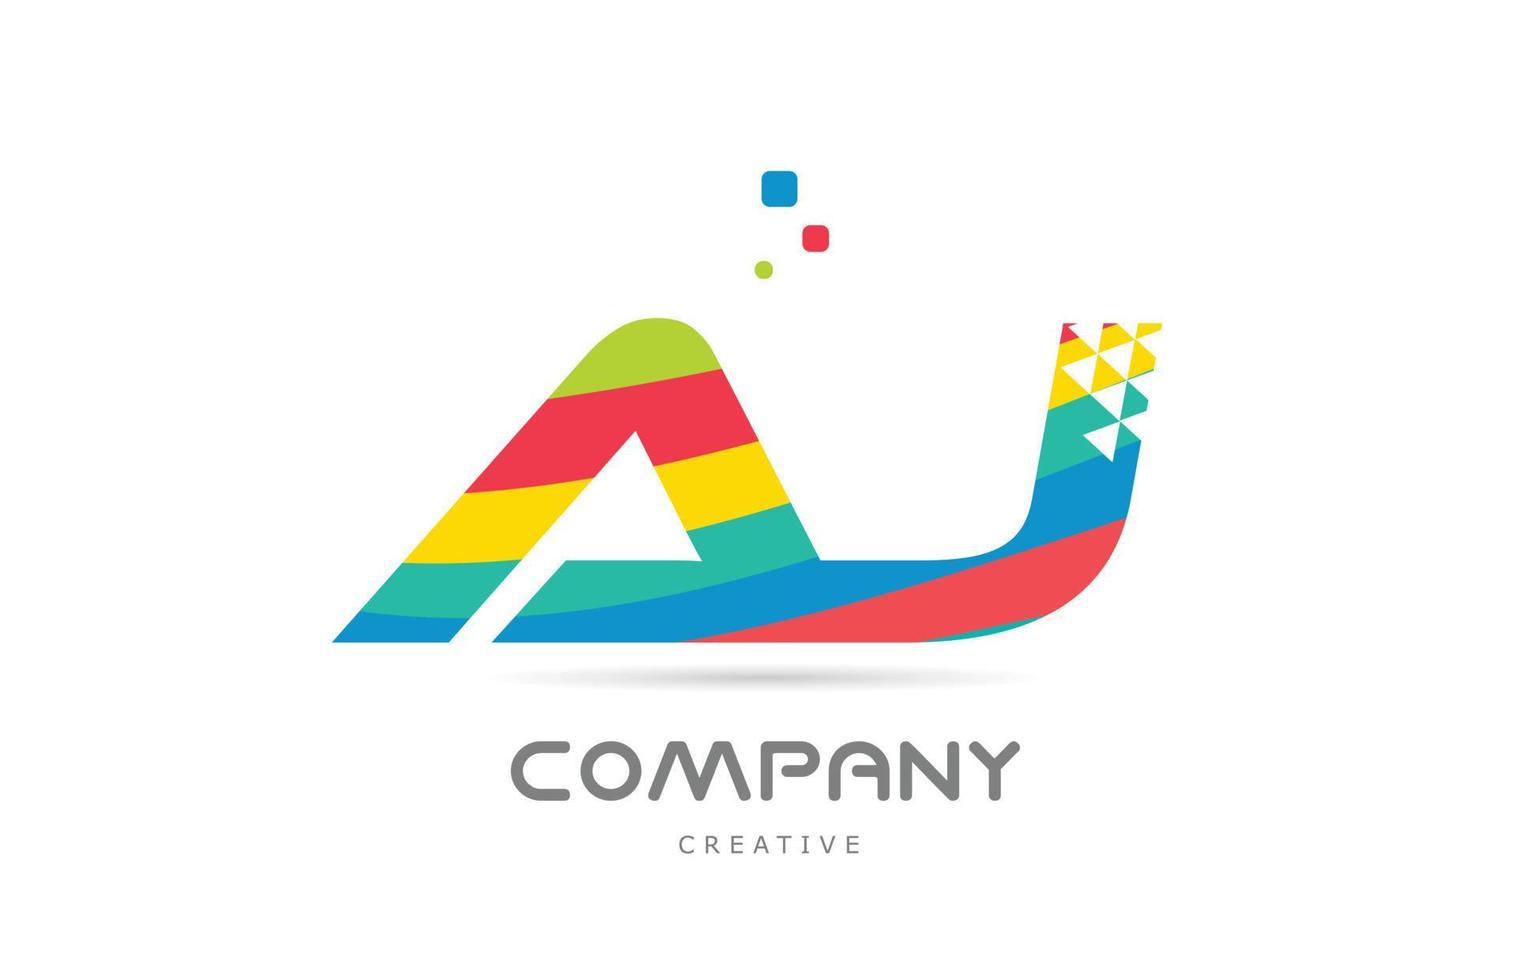 design de ícone do logotipo da letra do alfabeto colorido aj. design de modelo criativo colorido para empresa ou negócio vetor